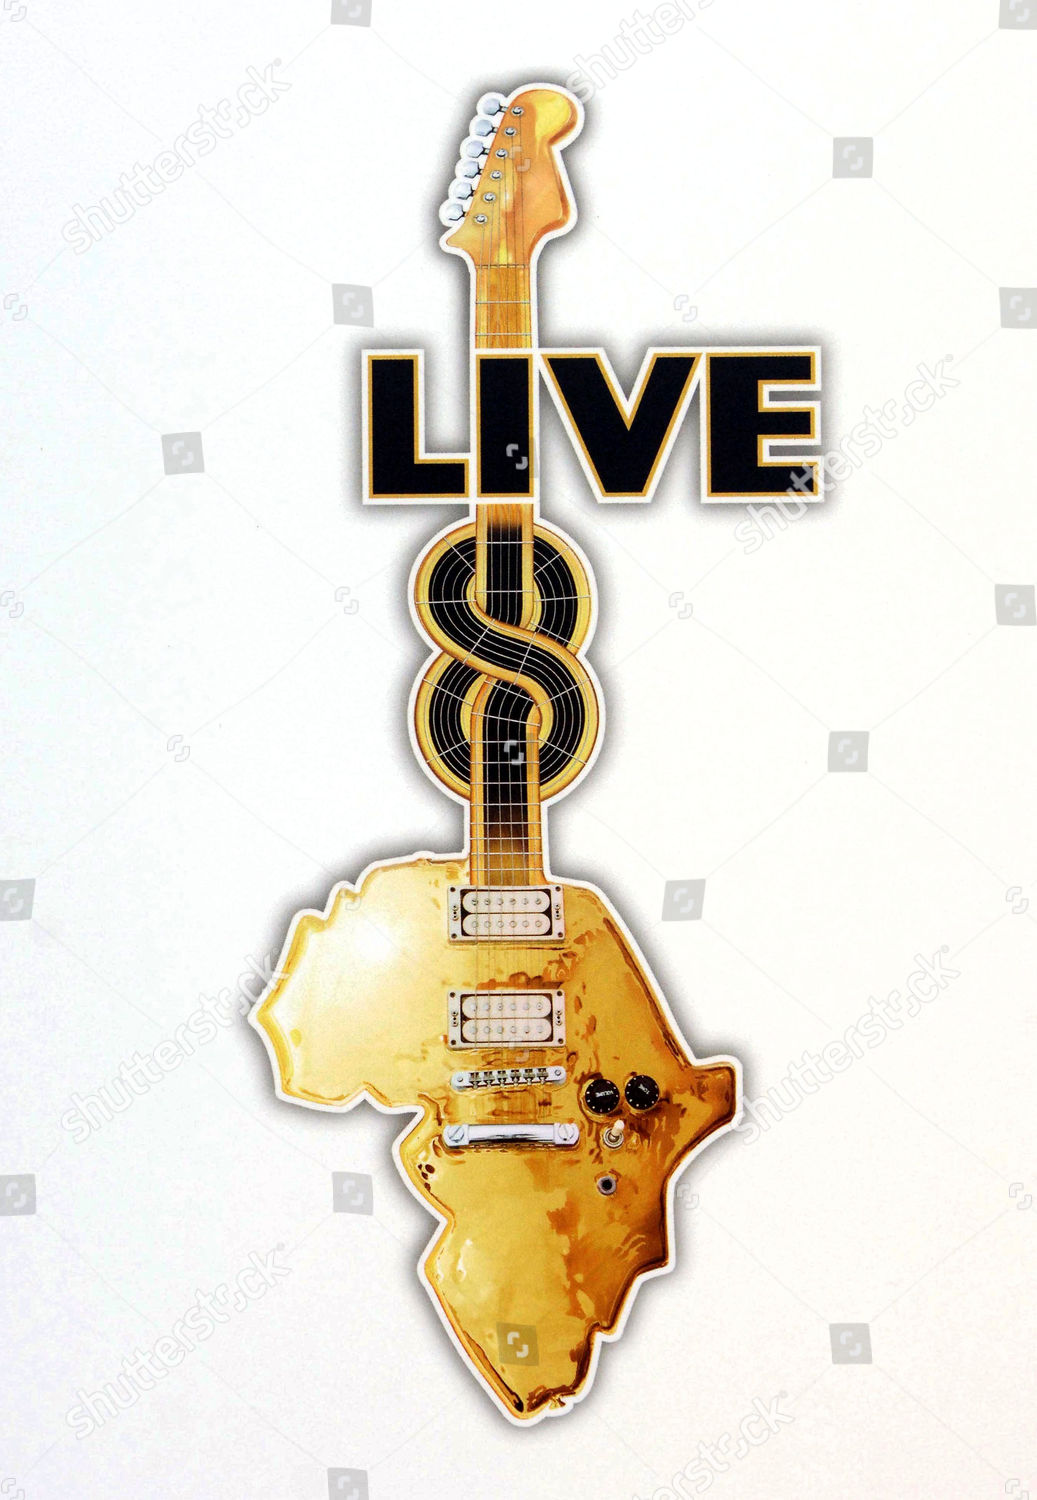 Live 8 Logo」のエディトリアル写真素材 - 画像素材 | Shutterstock